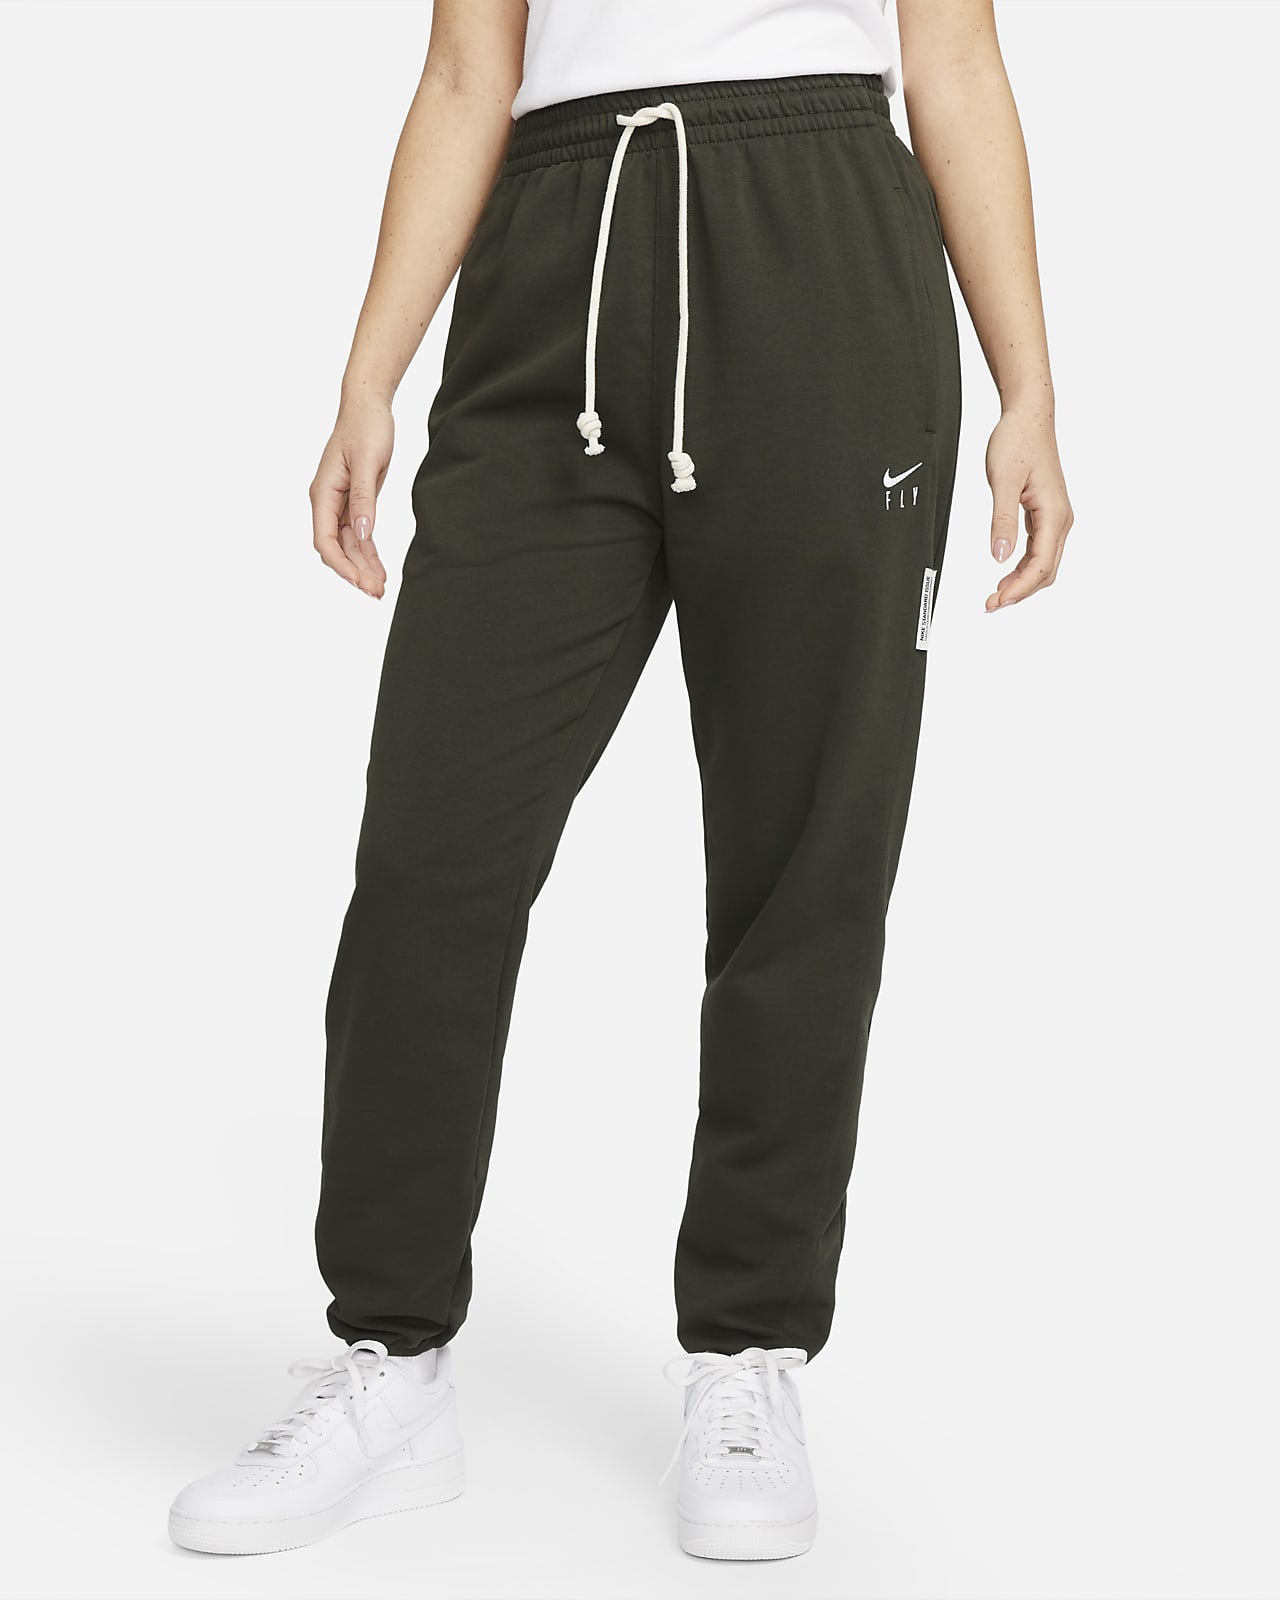 Pantalones de básquetbol para mujer Nike Swoosh Fly Standard Issue. Nike.com